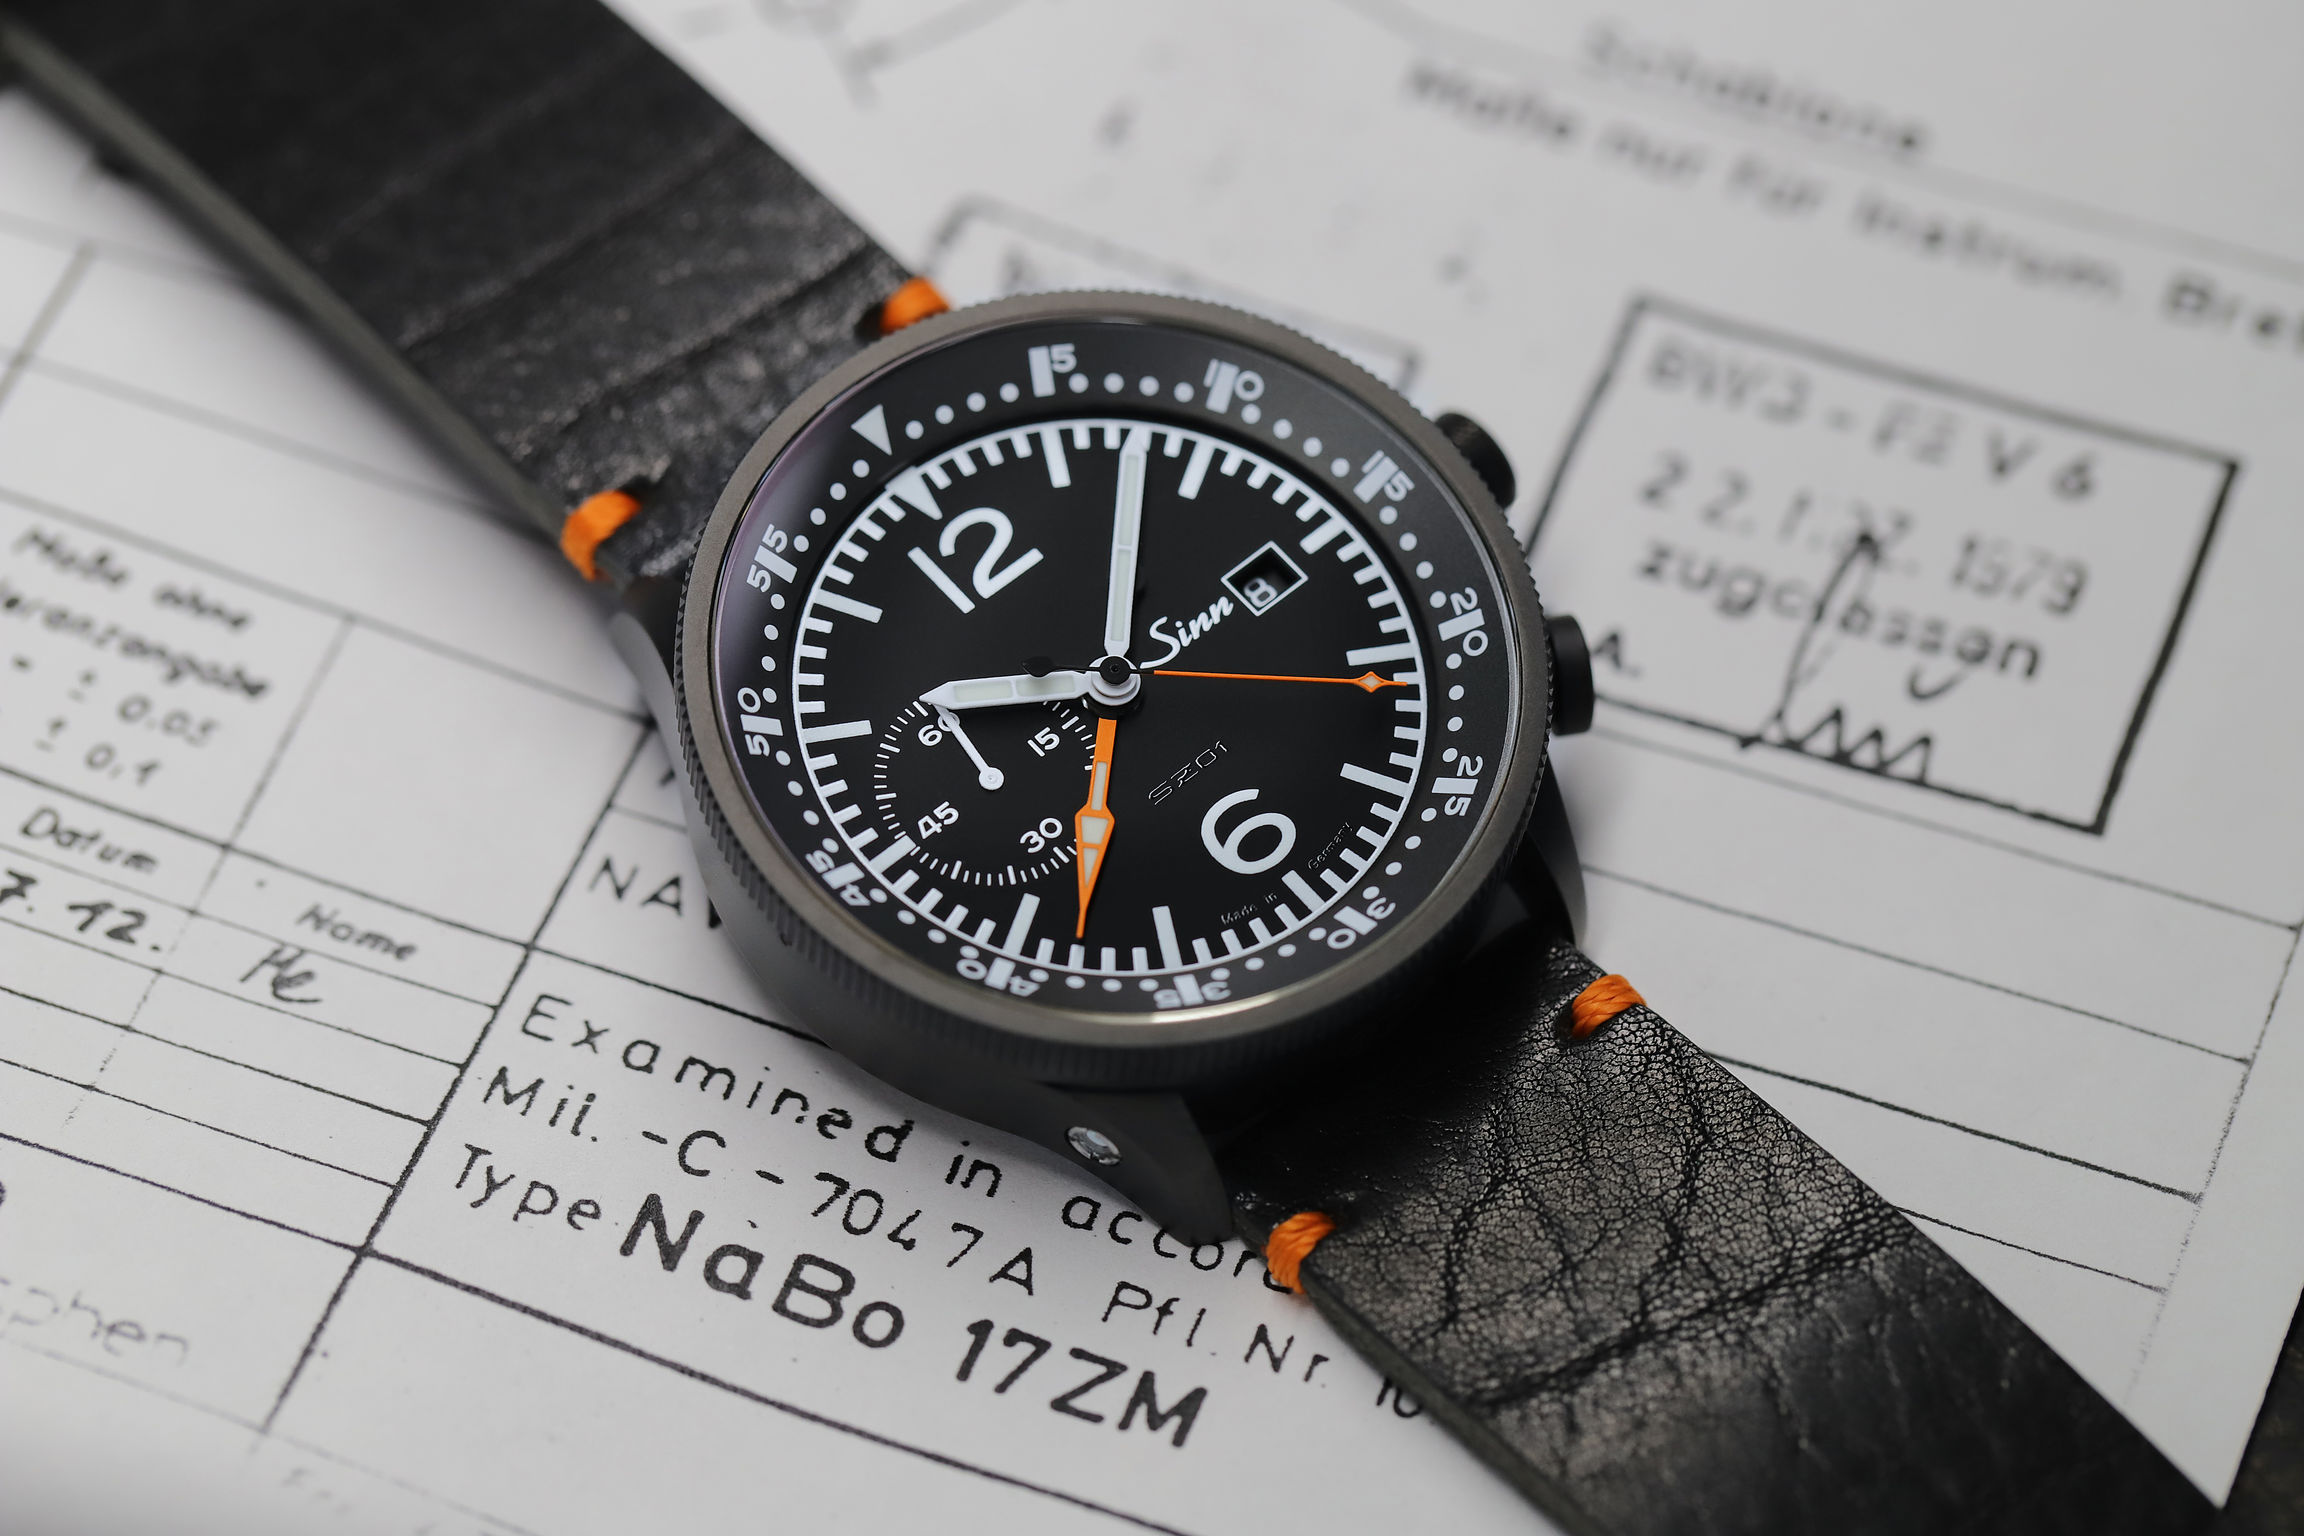 717 - The cockpit wristwatch